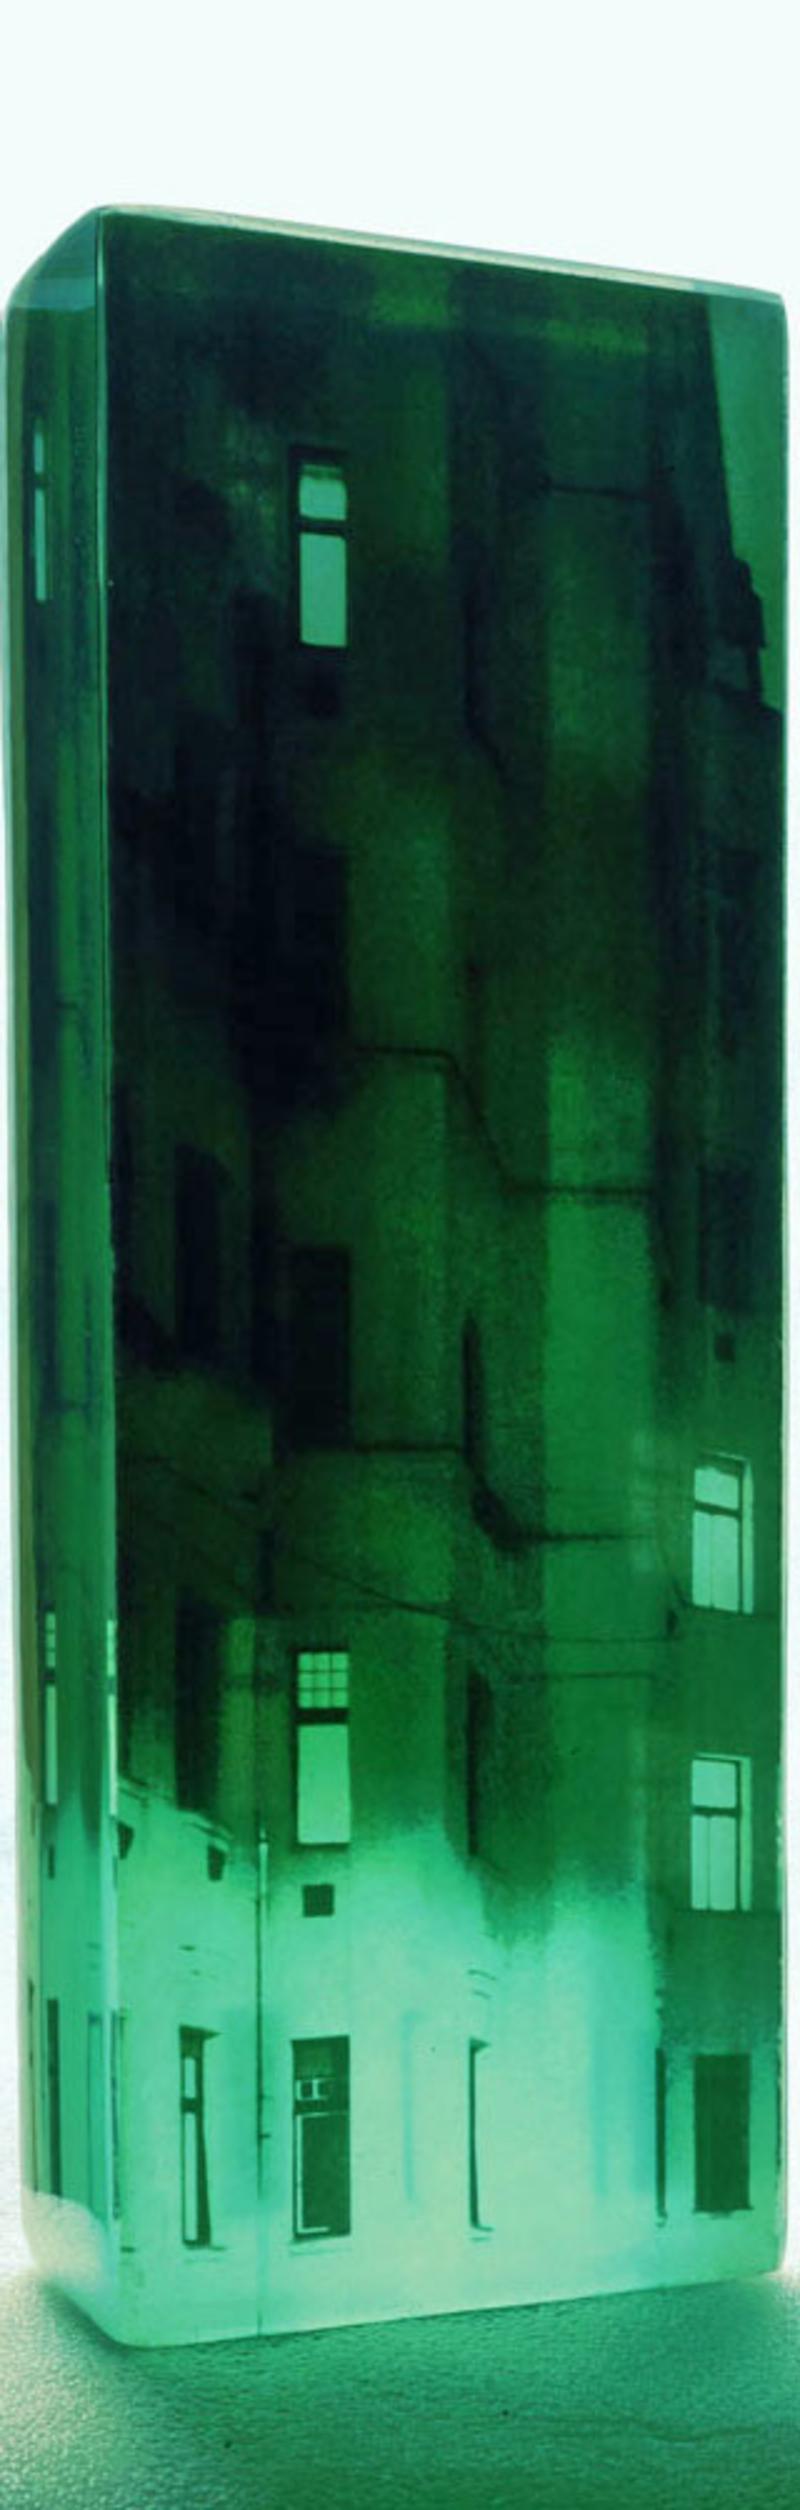 Parallel Worlds - Glowing Green City / Urban Scene in Sculptural Glass: Triptych - Sculpture by Jeff Cunningham